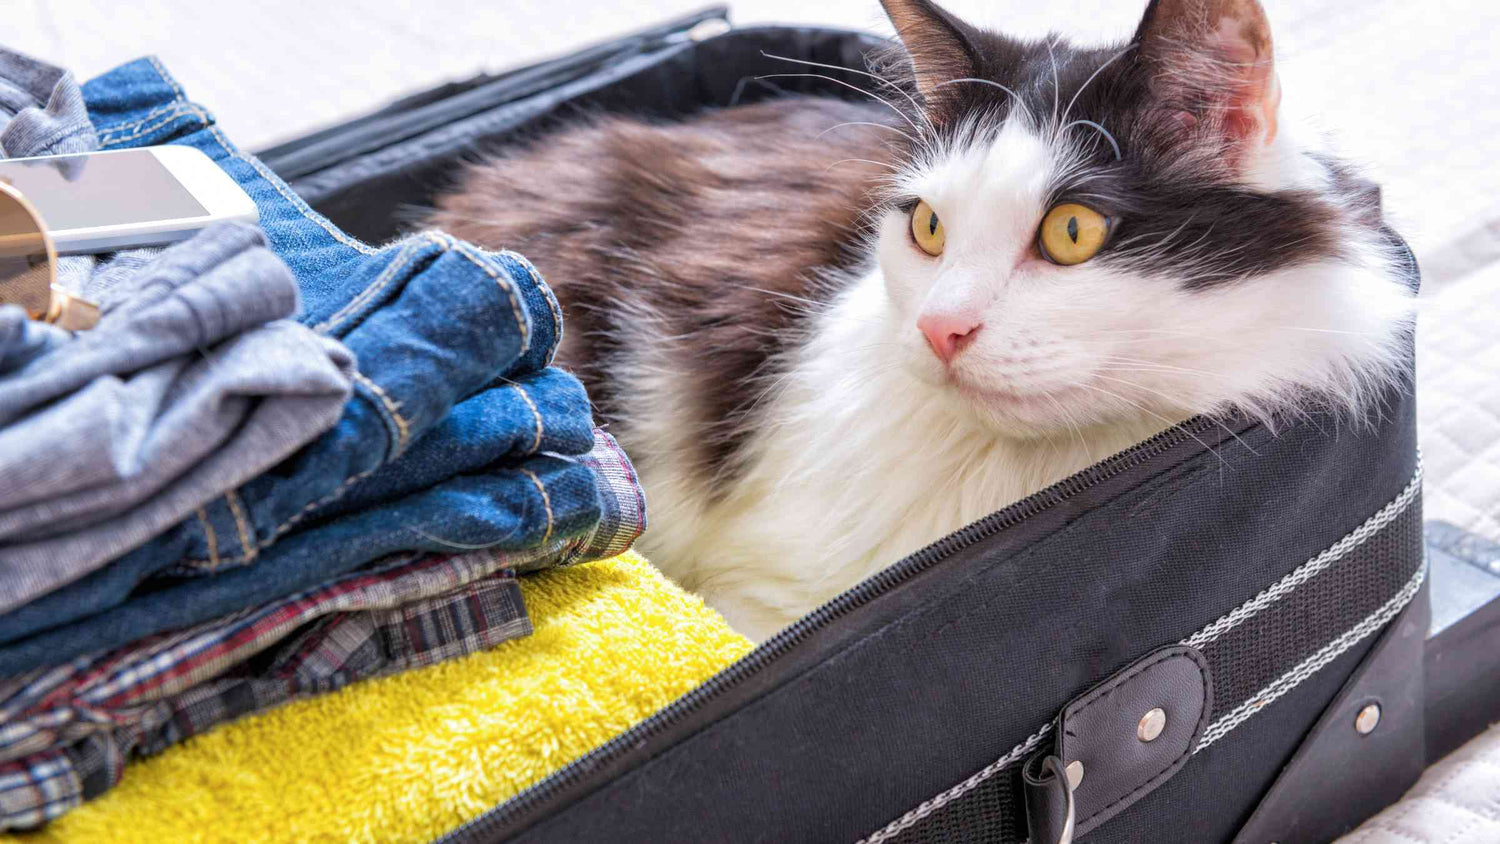 Cat sitting in a suitcase